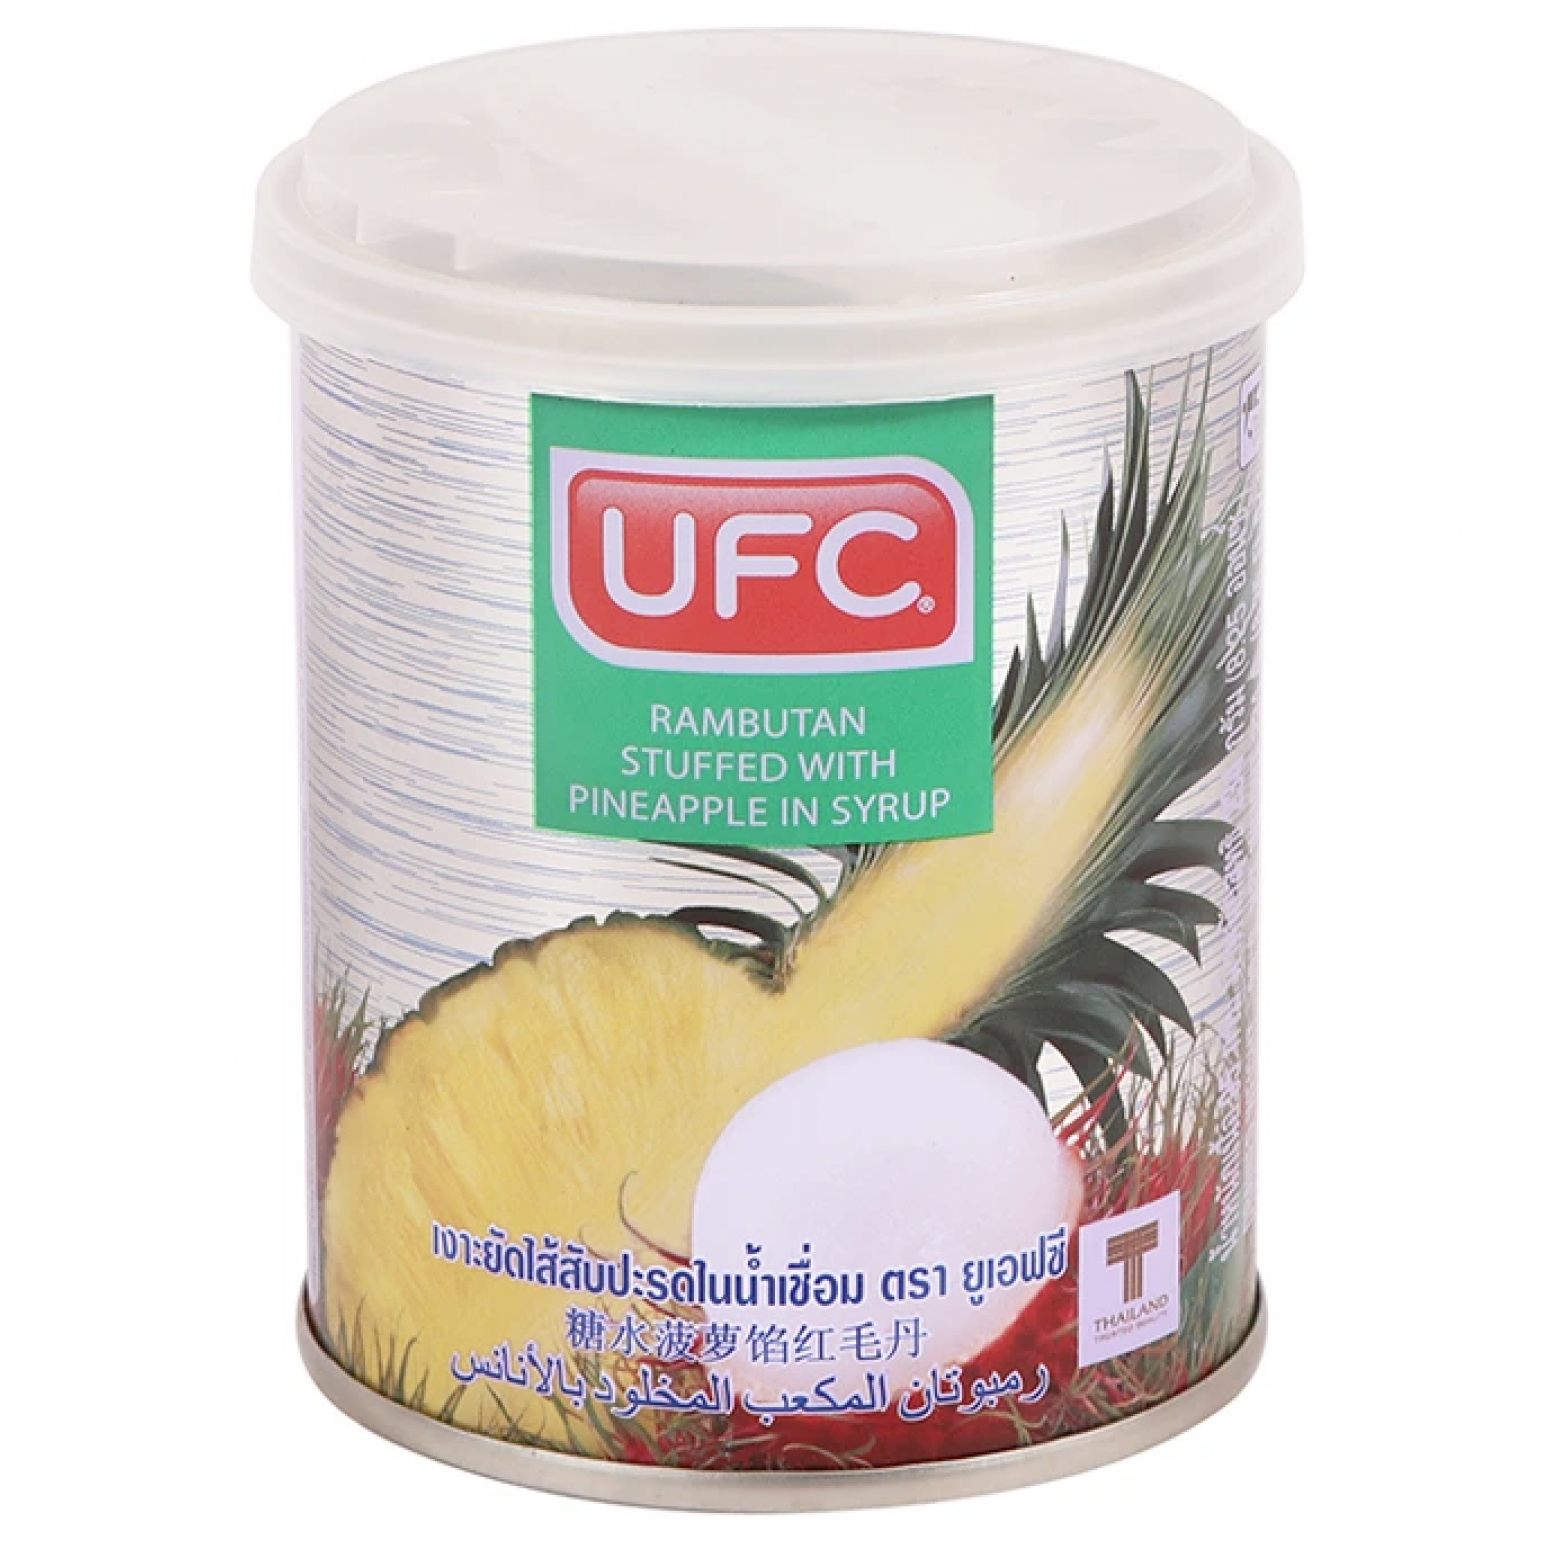 UFC Rambutan Stuffed with Pineapple in Syrup 234g.